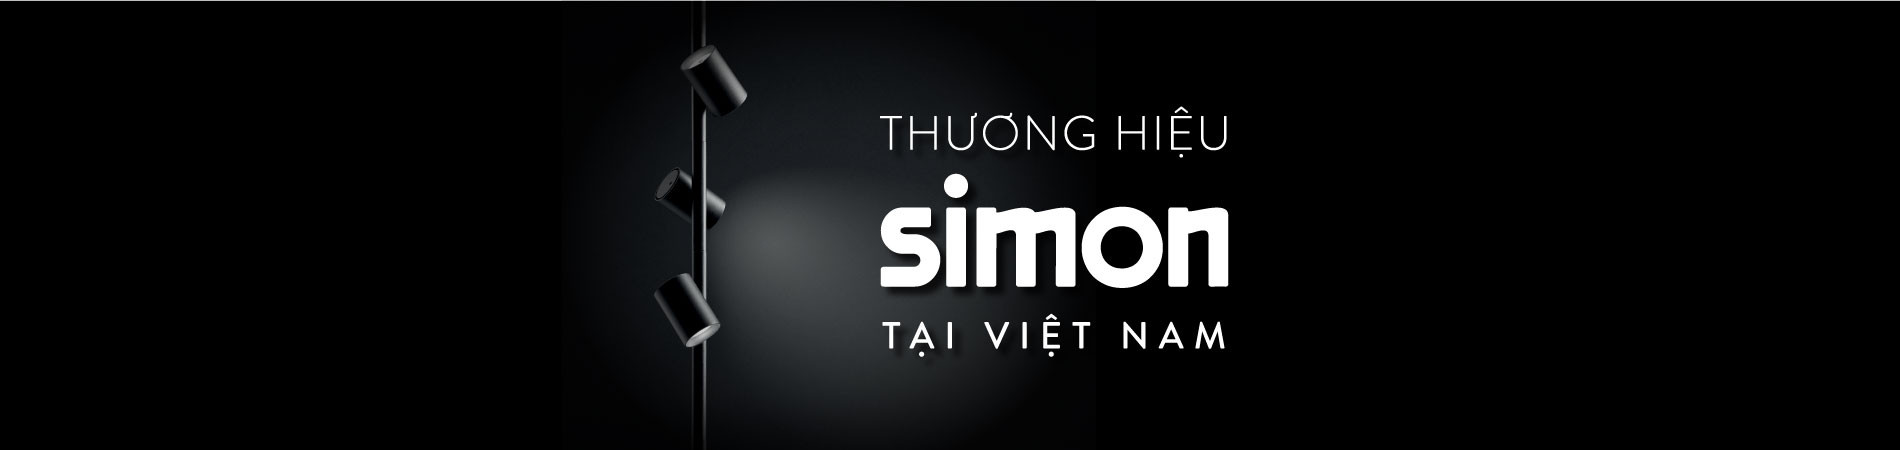 banner we love to understand simon in viet nam